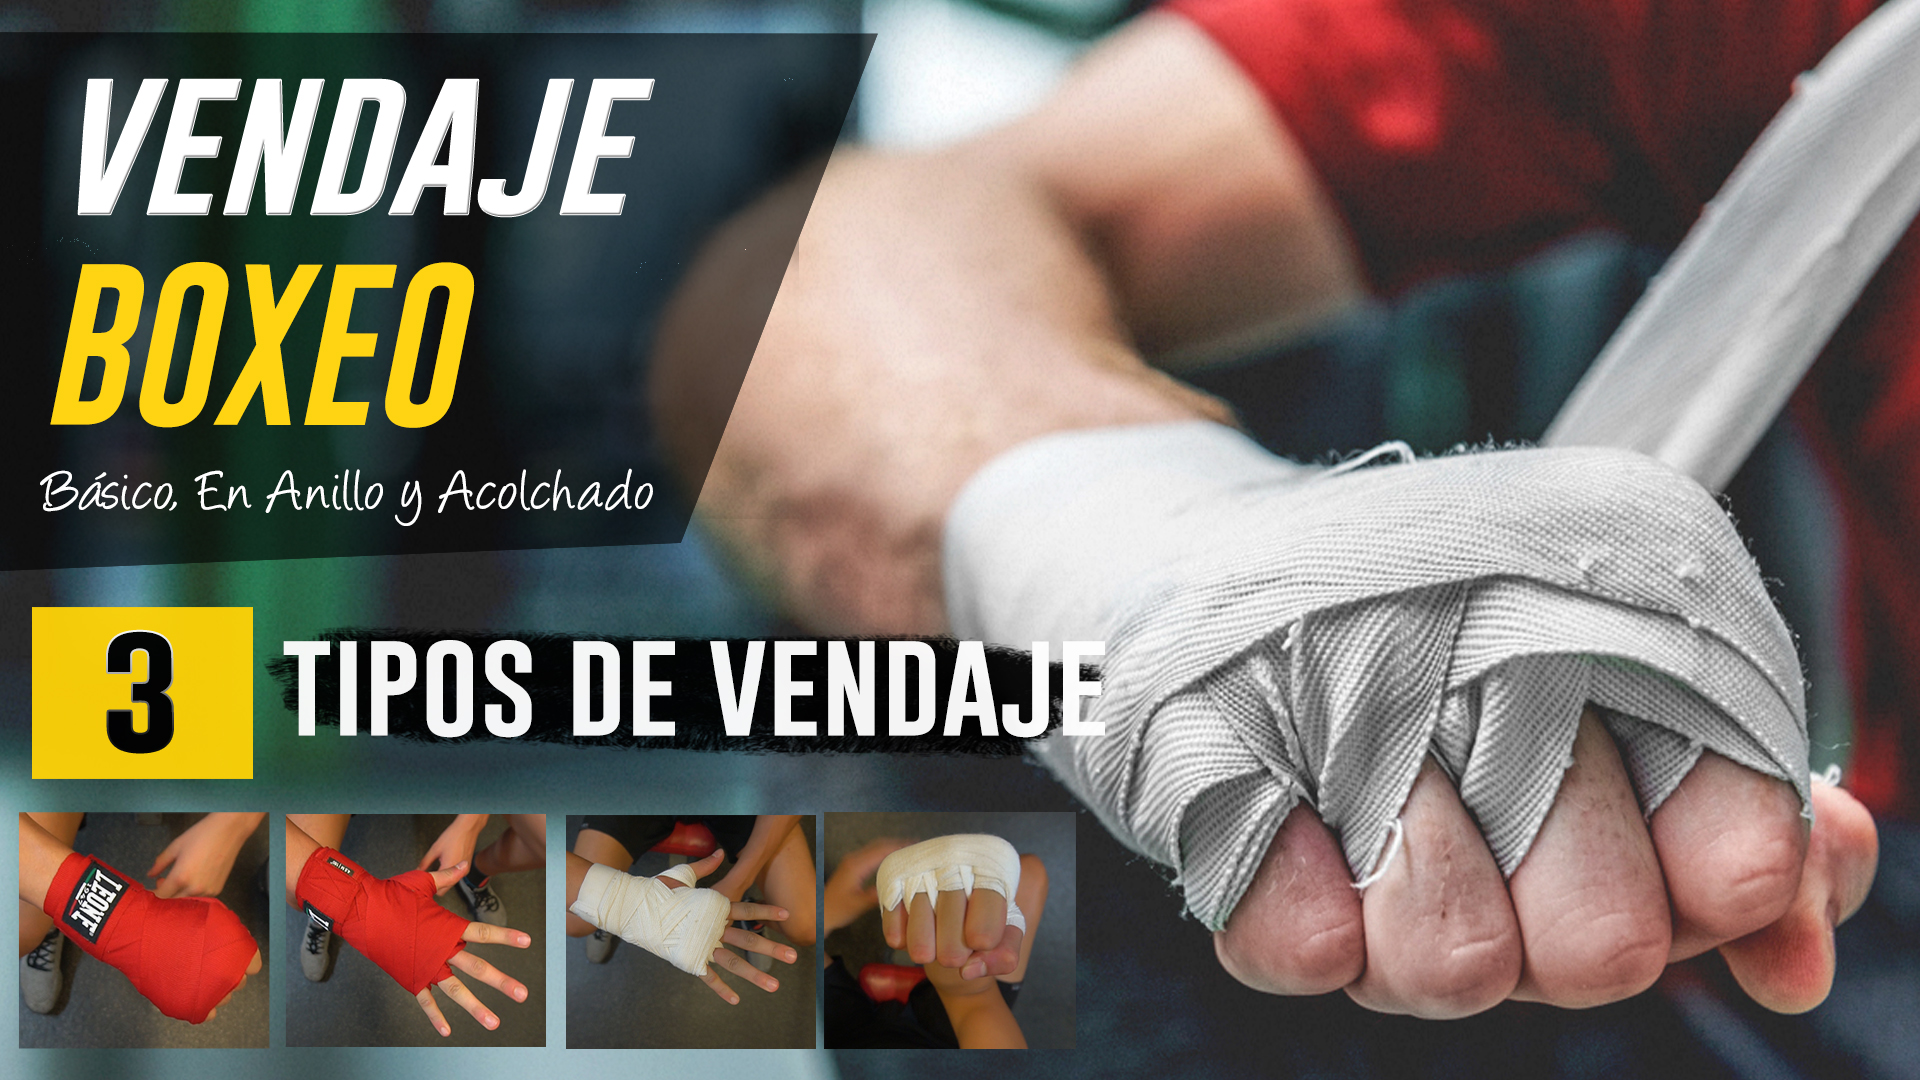 Como vendar tus manos! 💯👊🏼 #vendas #vendaje #boxeo #vendajeboxeo, vendaje  boxeo 3 metros